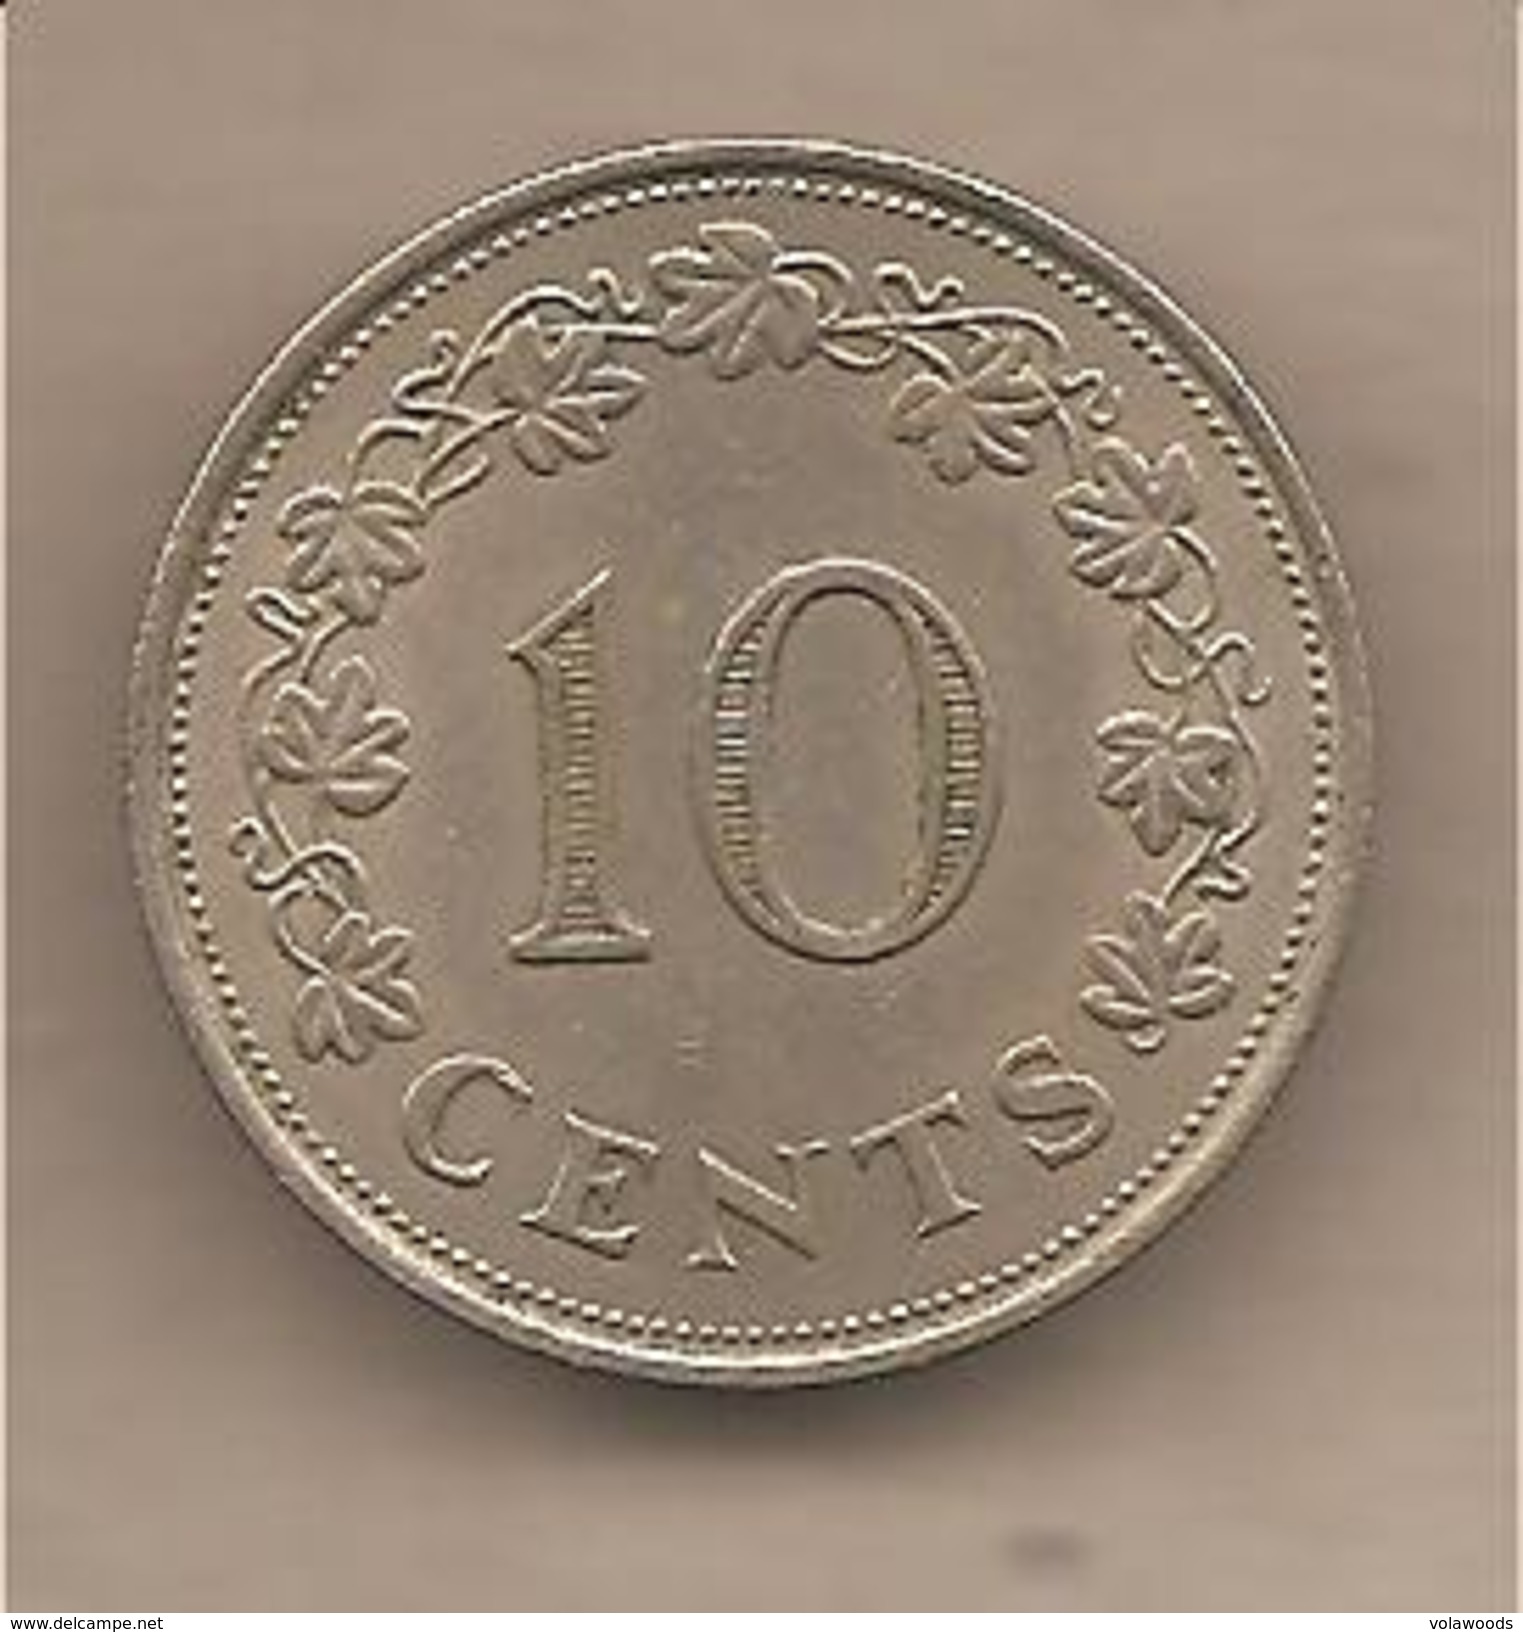 Malta - Moneta Circolata Da 10 Centesimi - 1972 - Malte